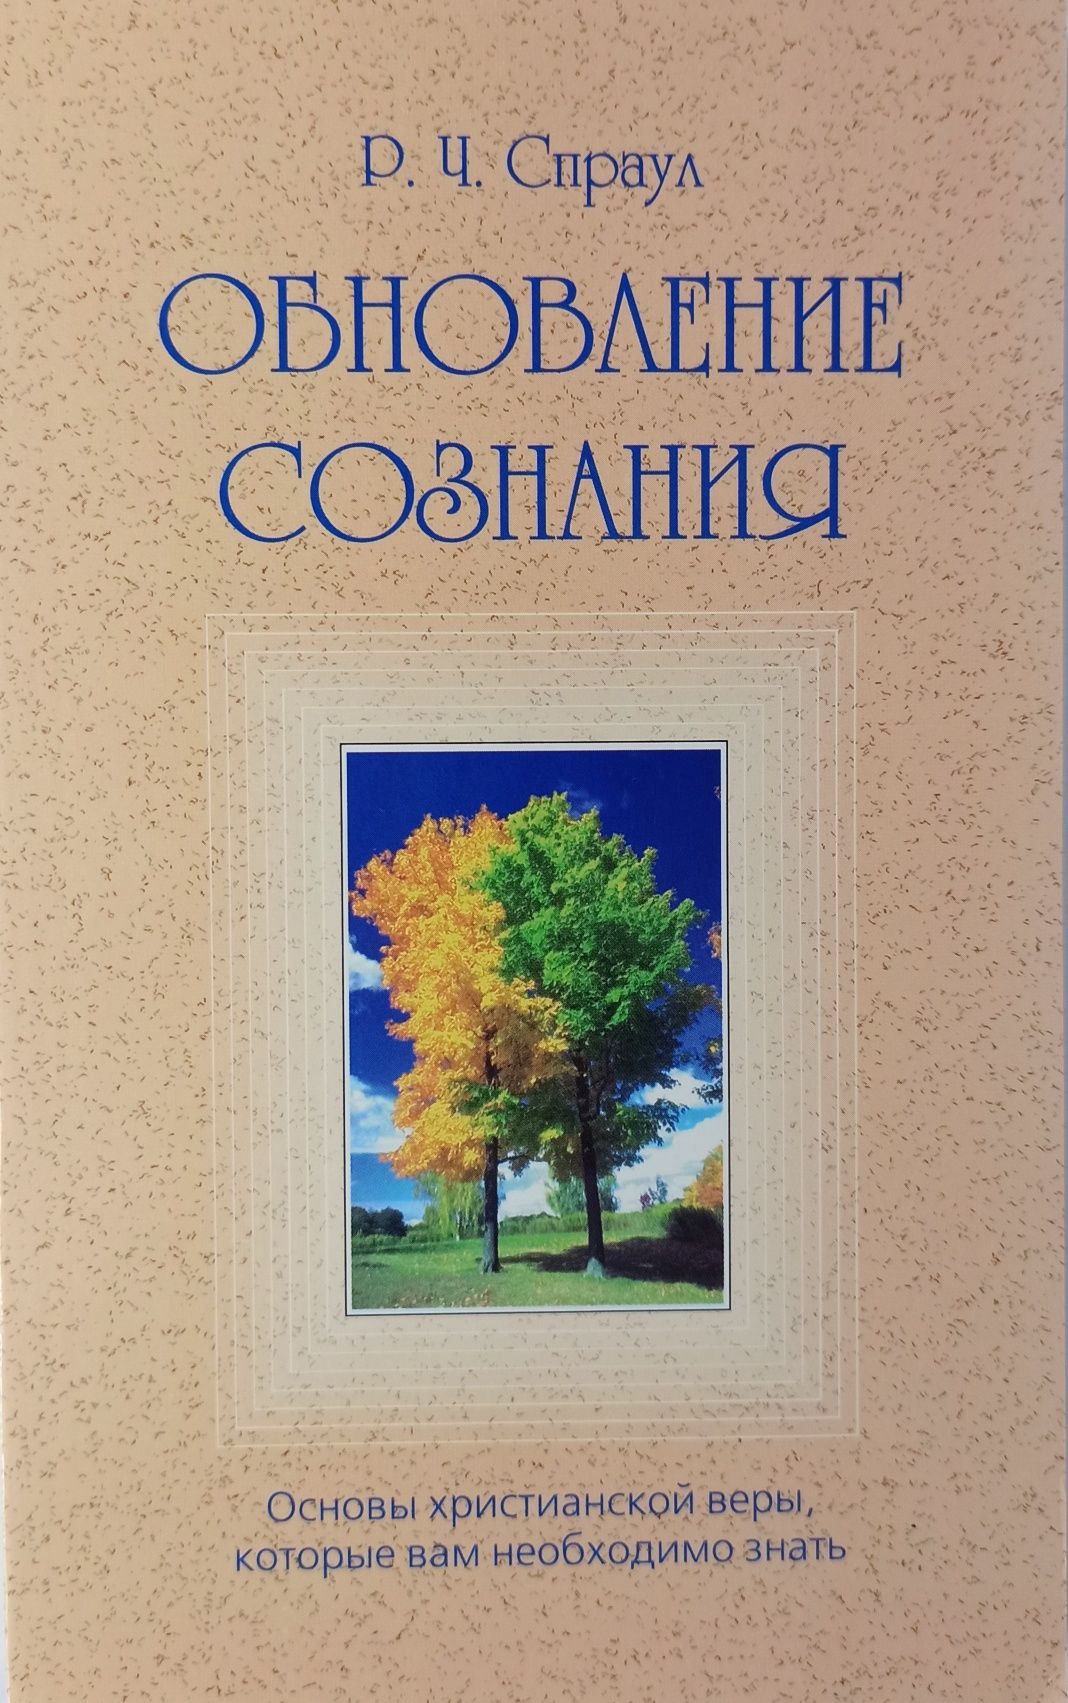 Книги Роберта Спраула Богословие Tovit Books